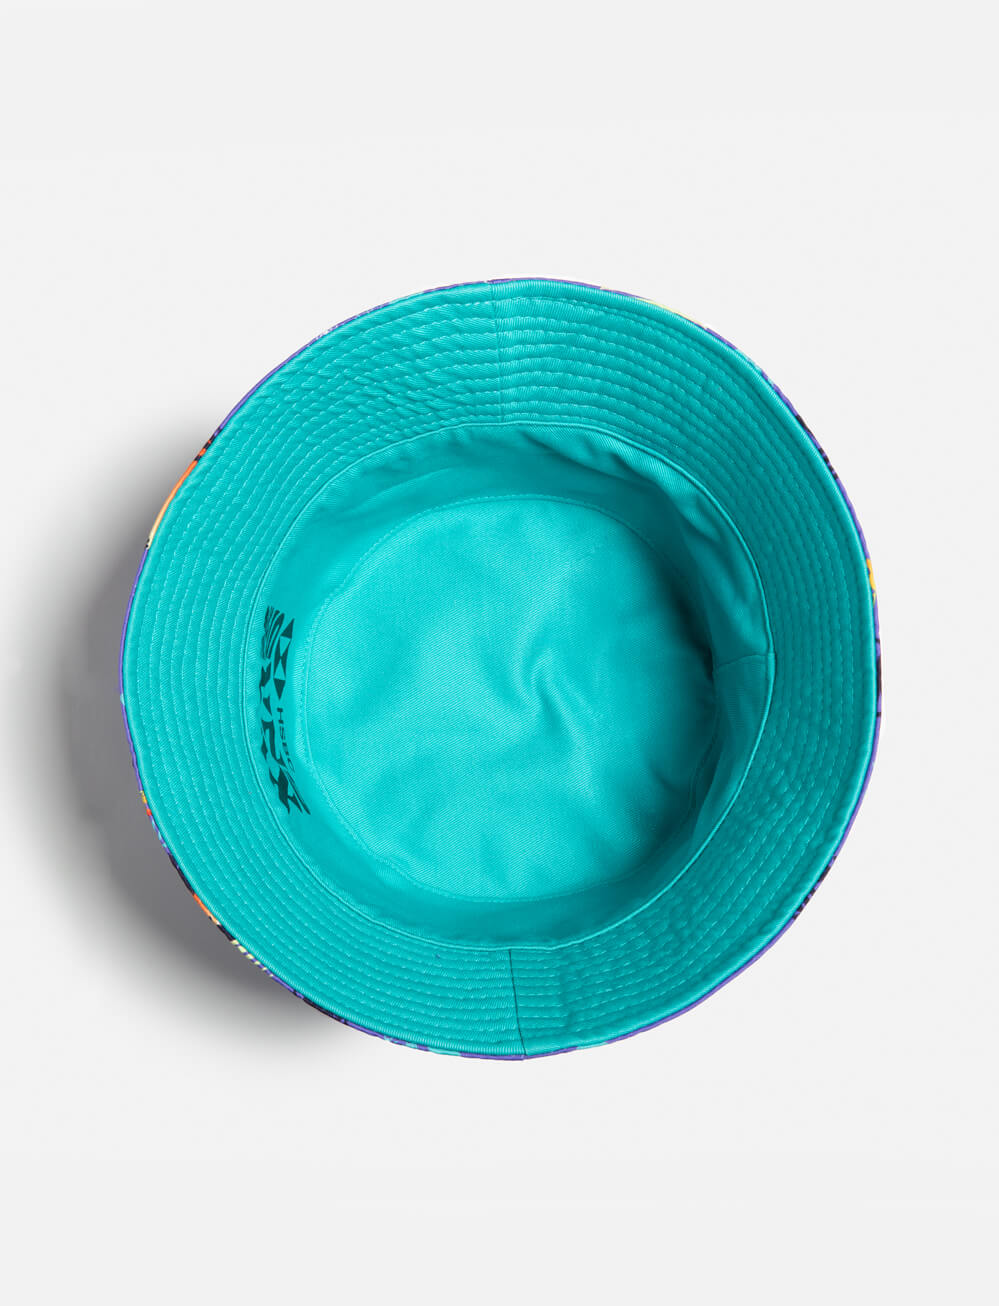 SVNS LA Event Reversible Bucket Hat - Turquoise